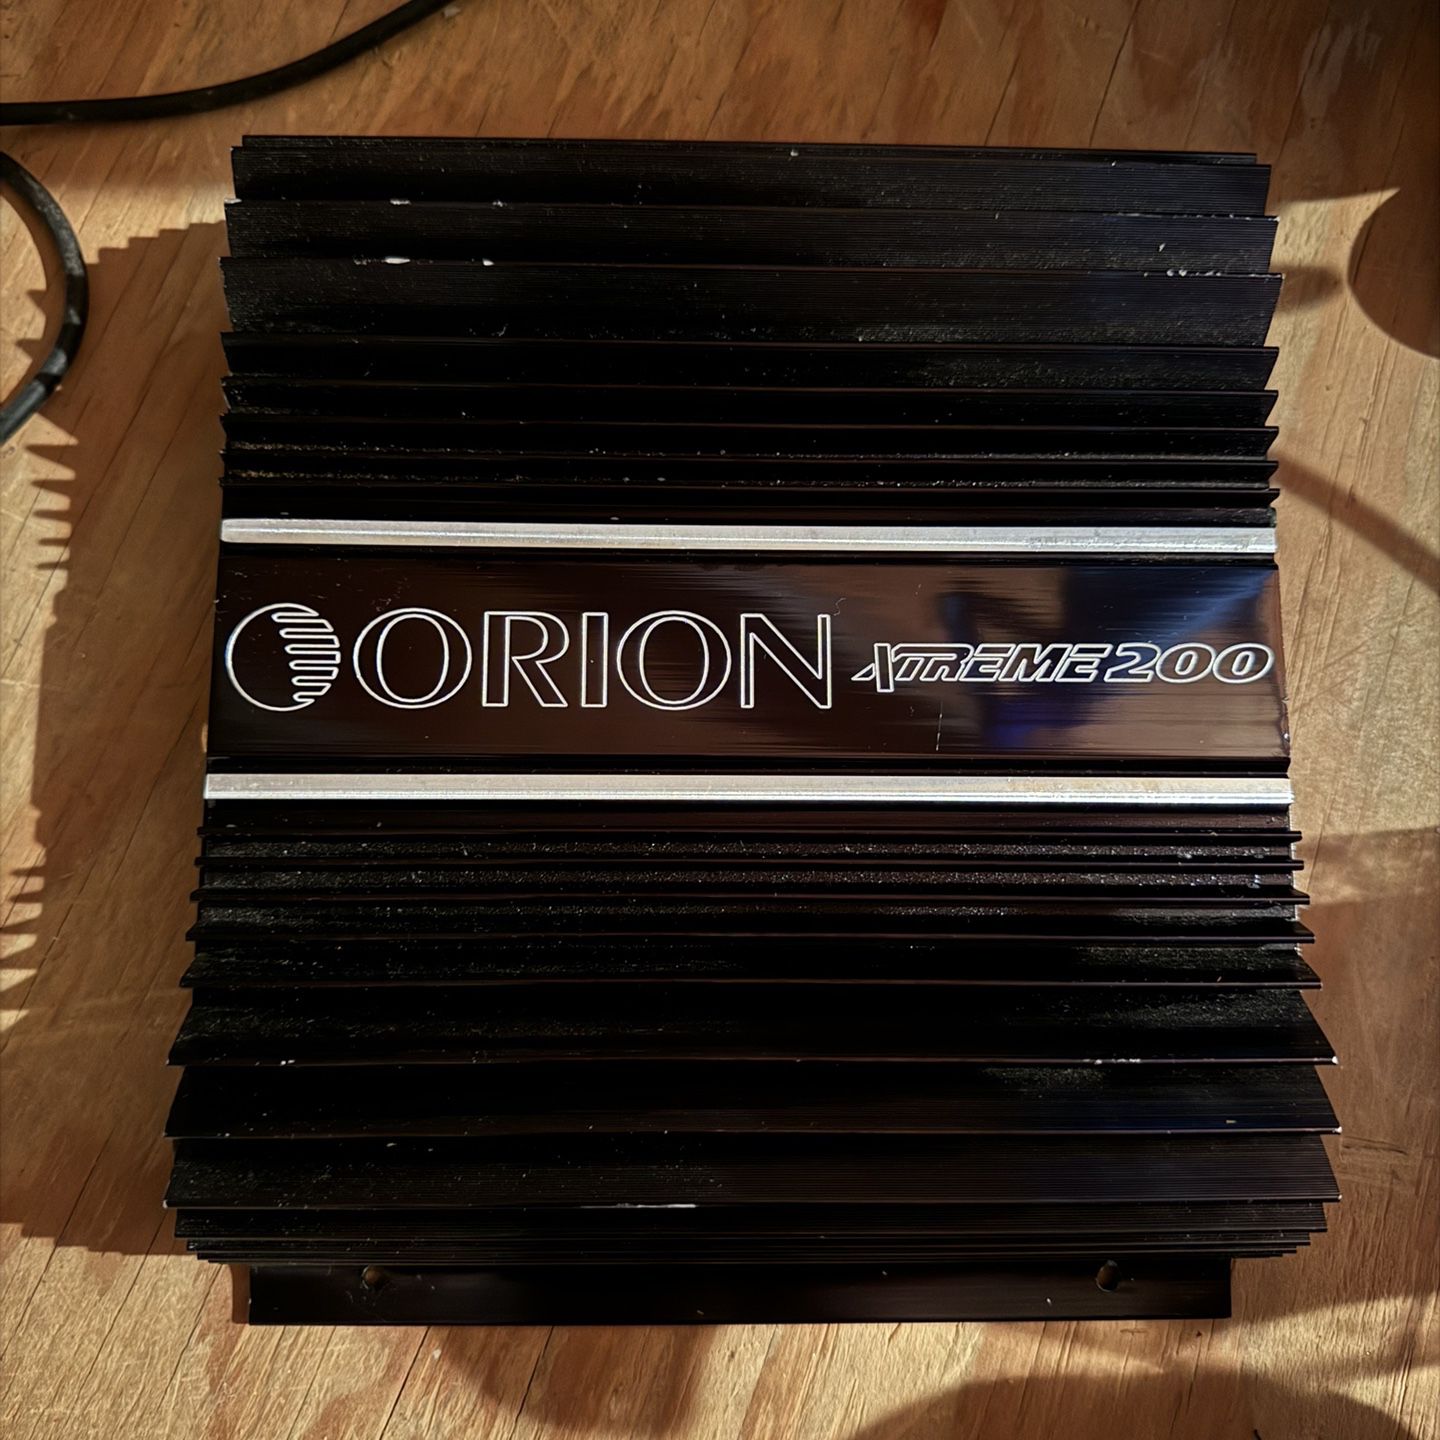 Orion Xtreme 200